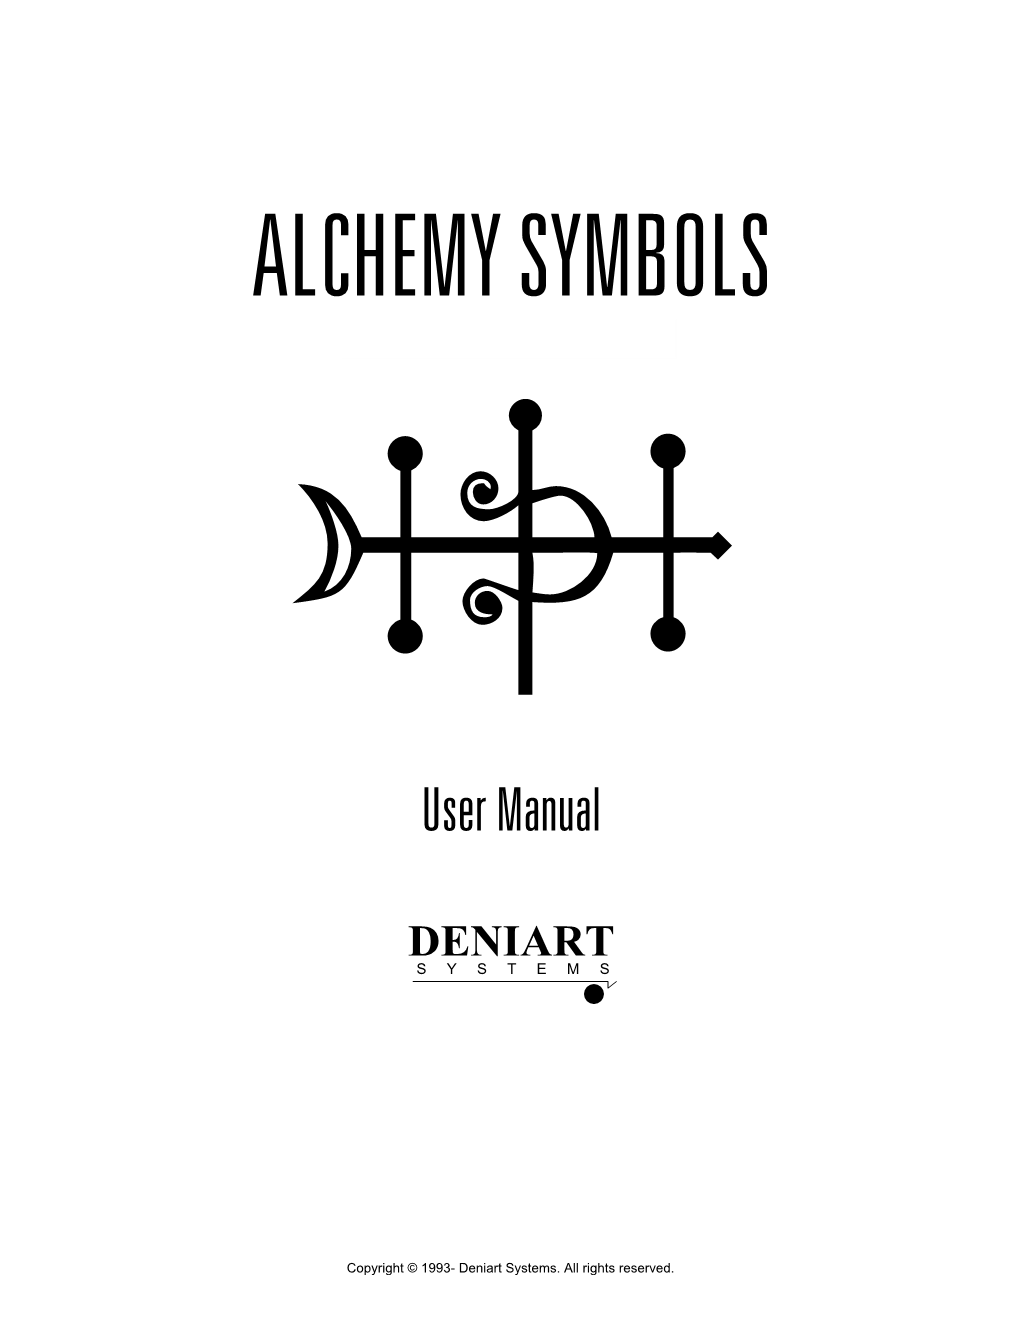 ALCHEMY SYMBOLS TRUETYPE and POSTSCRIPT TYPE 1 FONTS a User Manual